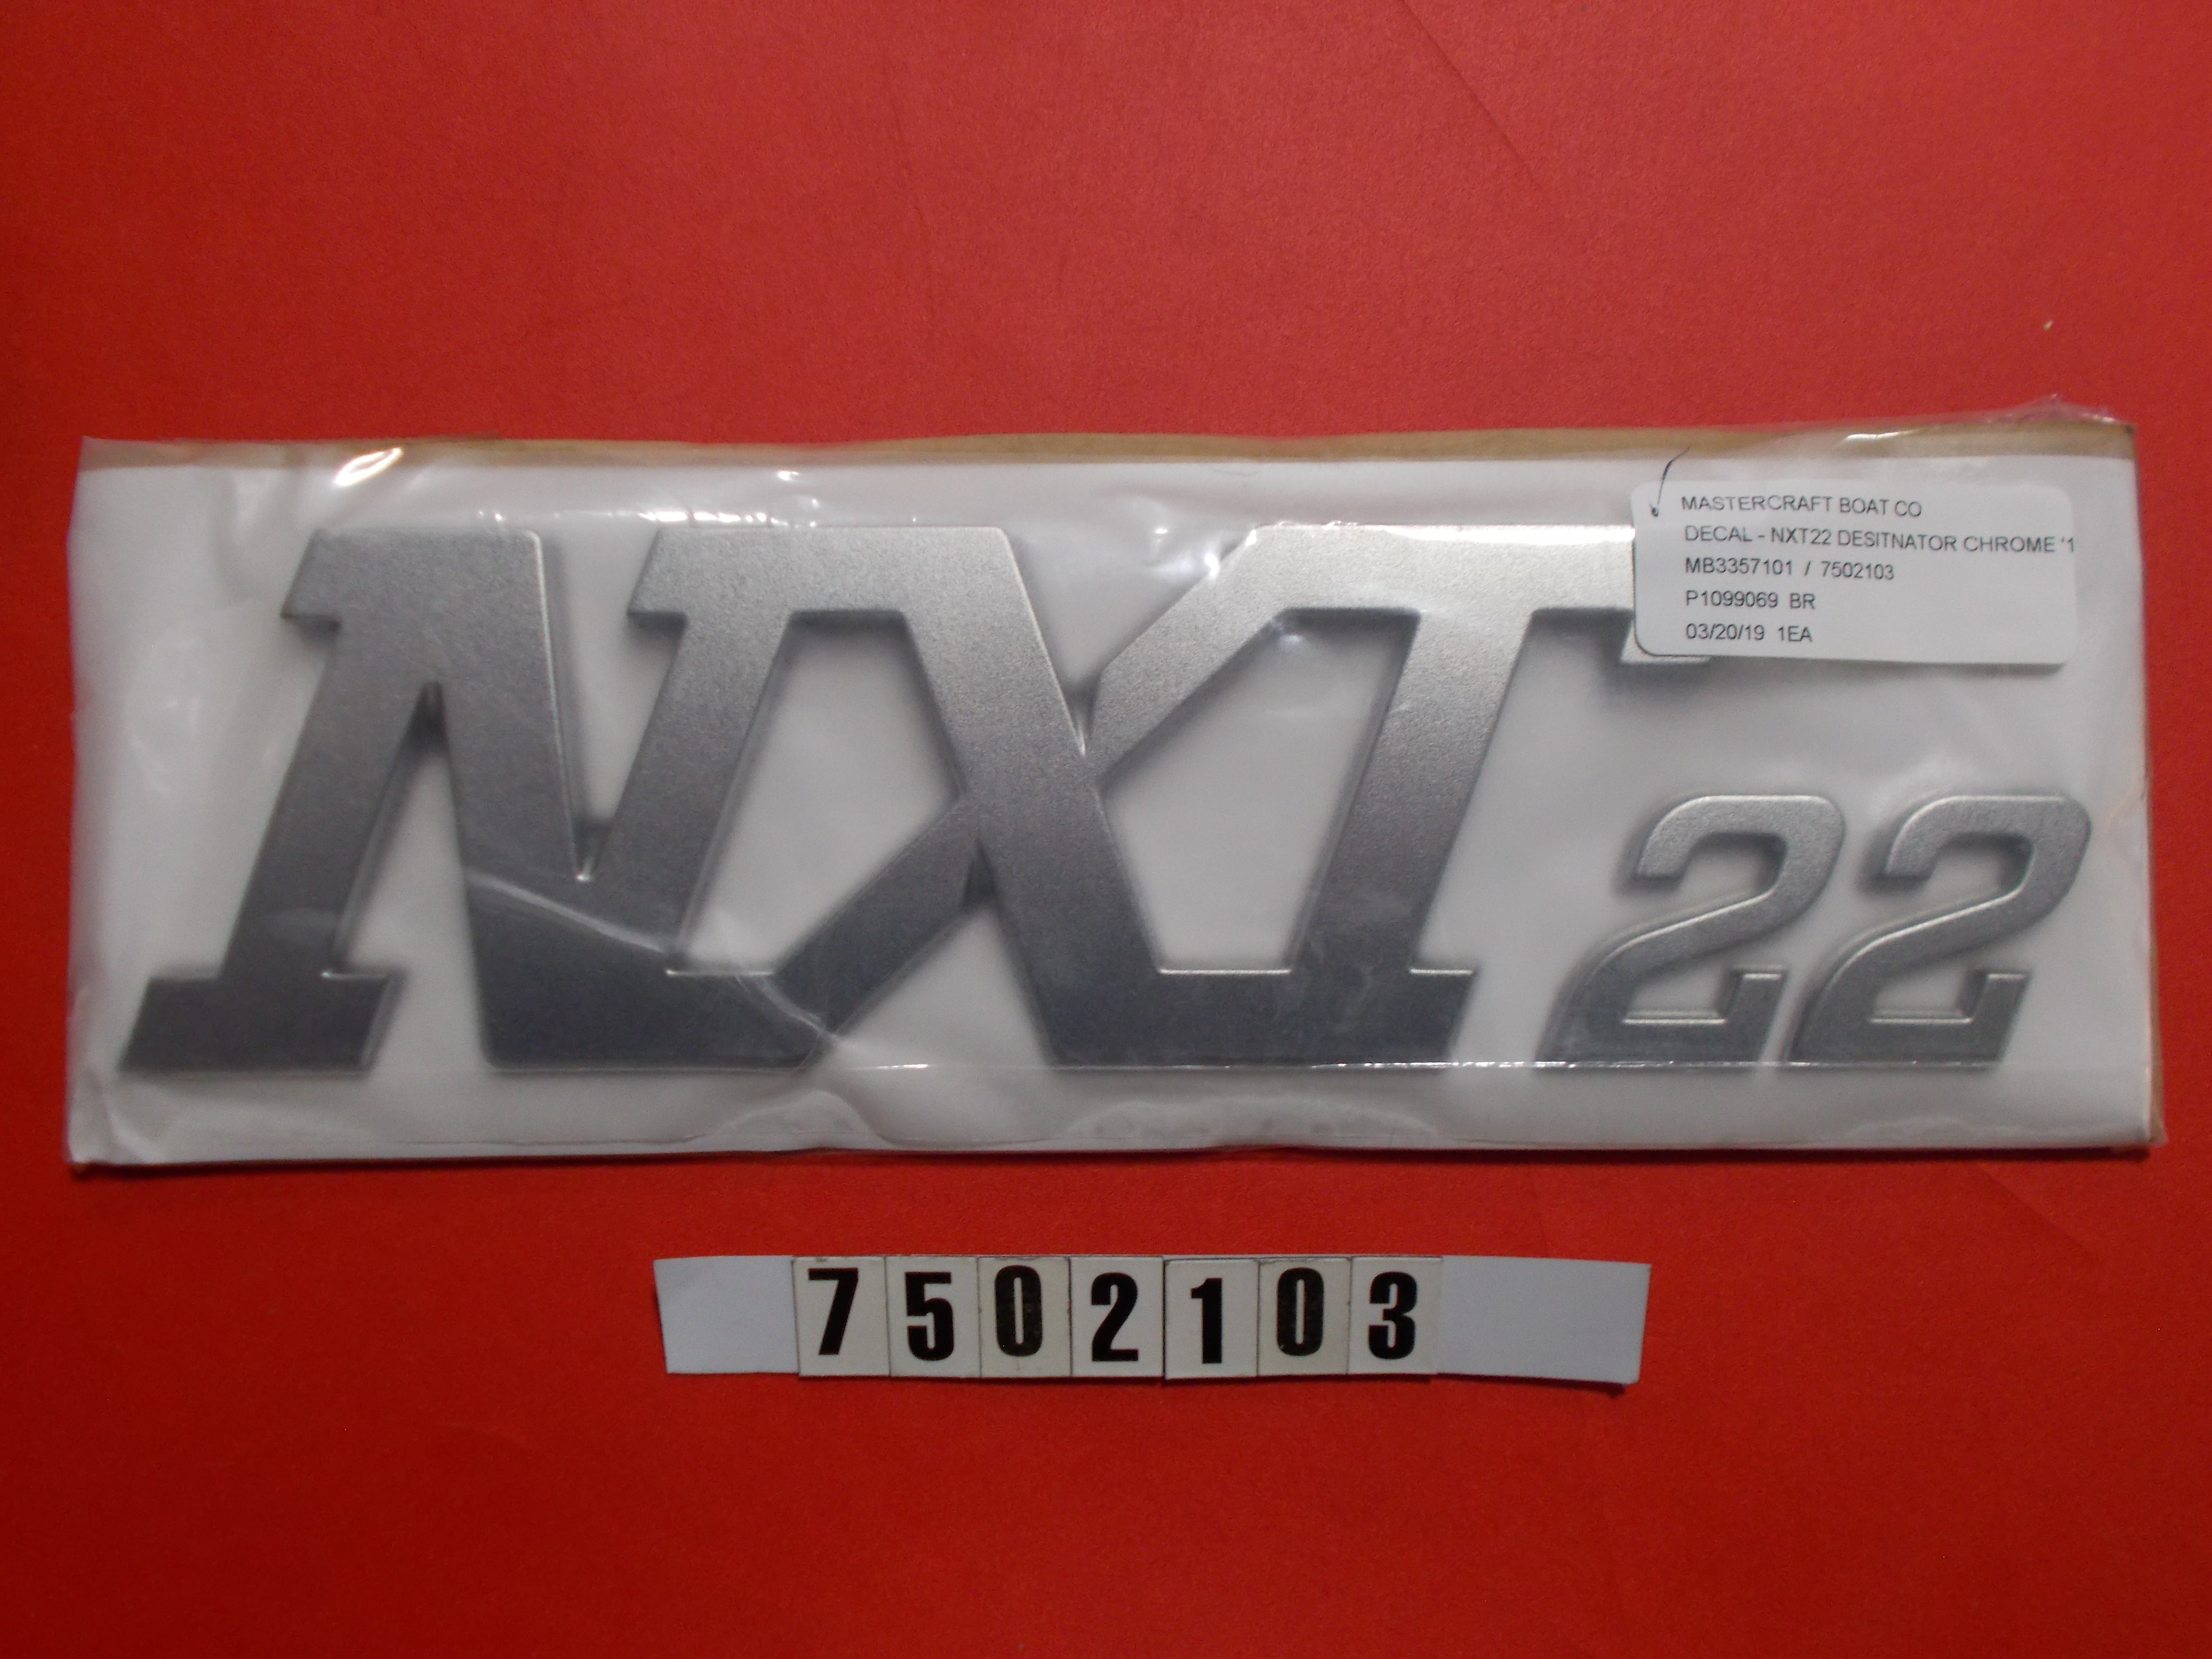 DECAL-DESIGNATOR CHROME NXT22 '17